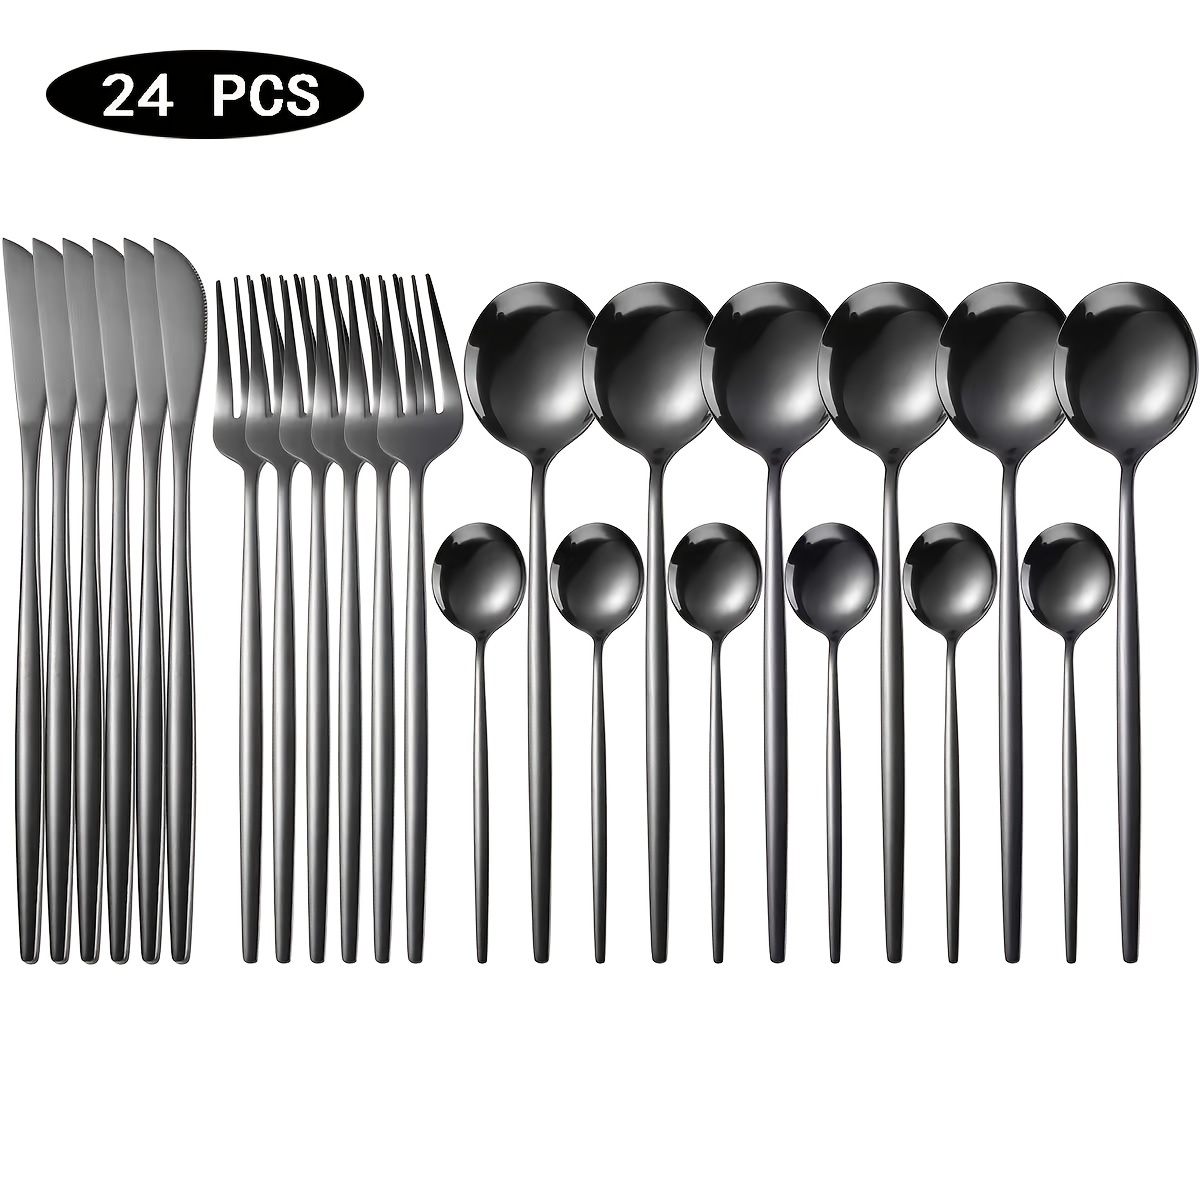 20 Piece Silverware Set, ENLOY Stainless Steel Flatware  Cutlery Set, Kitchen Utensil Set Service for 4, Include Knife Fork Spoon,  Mirror Polished, Dishwasher Safe: Flatware Sets